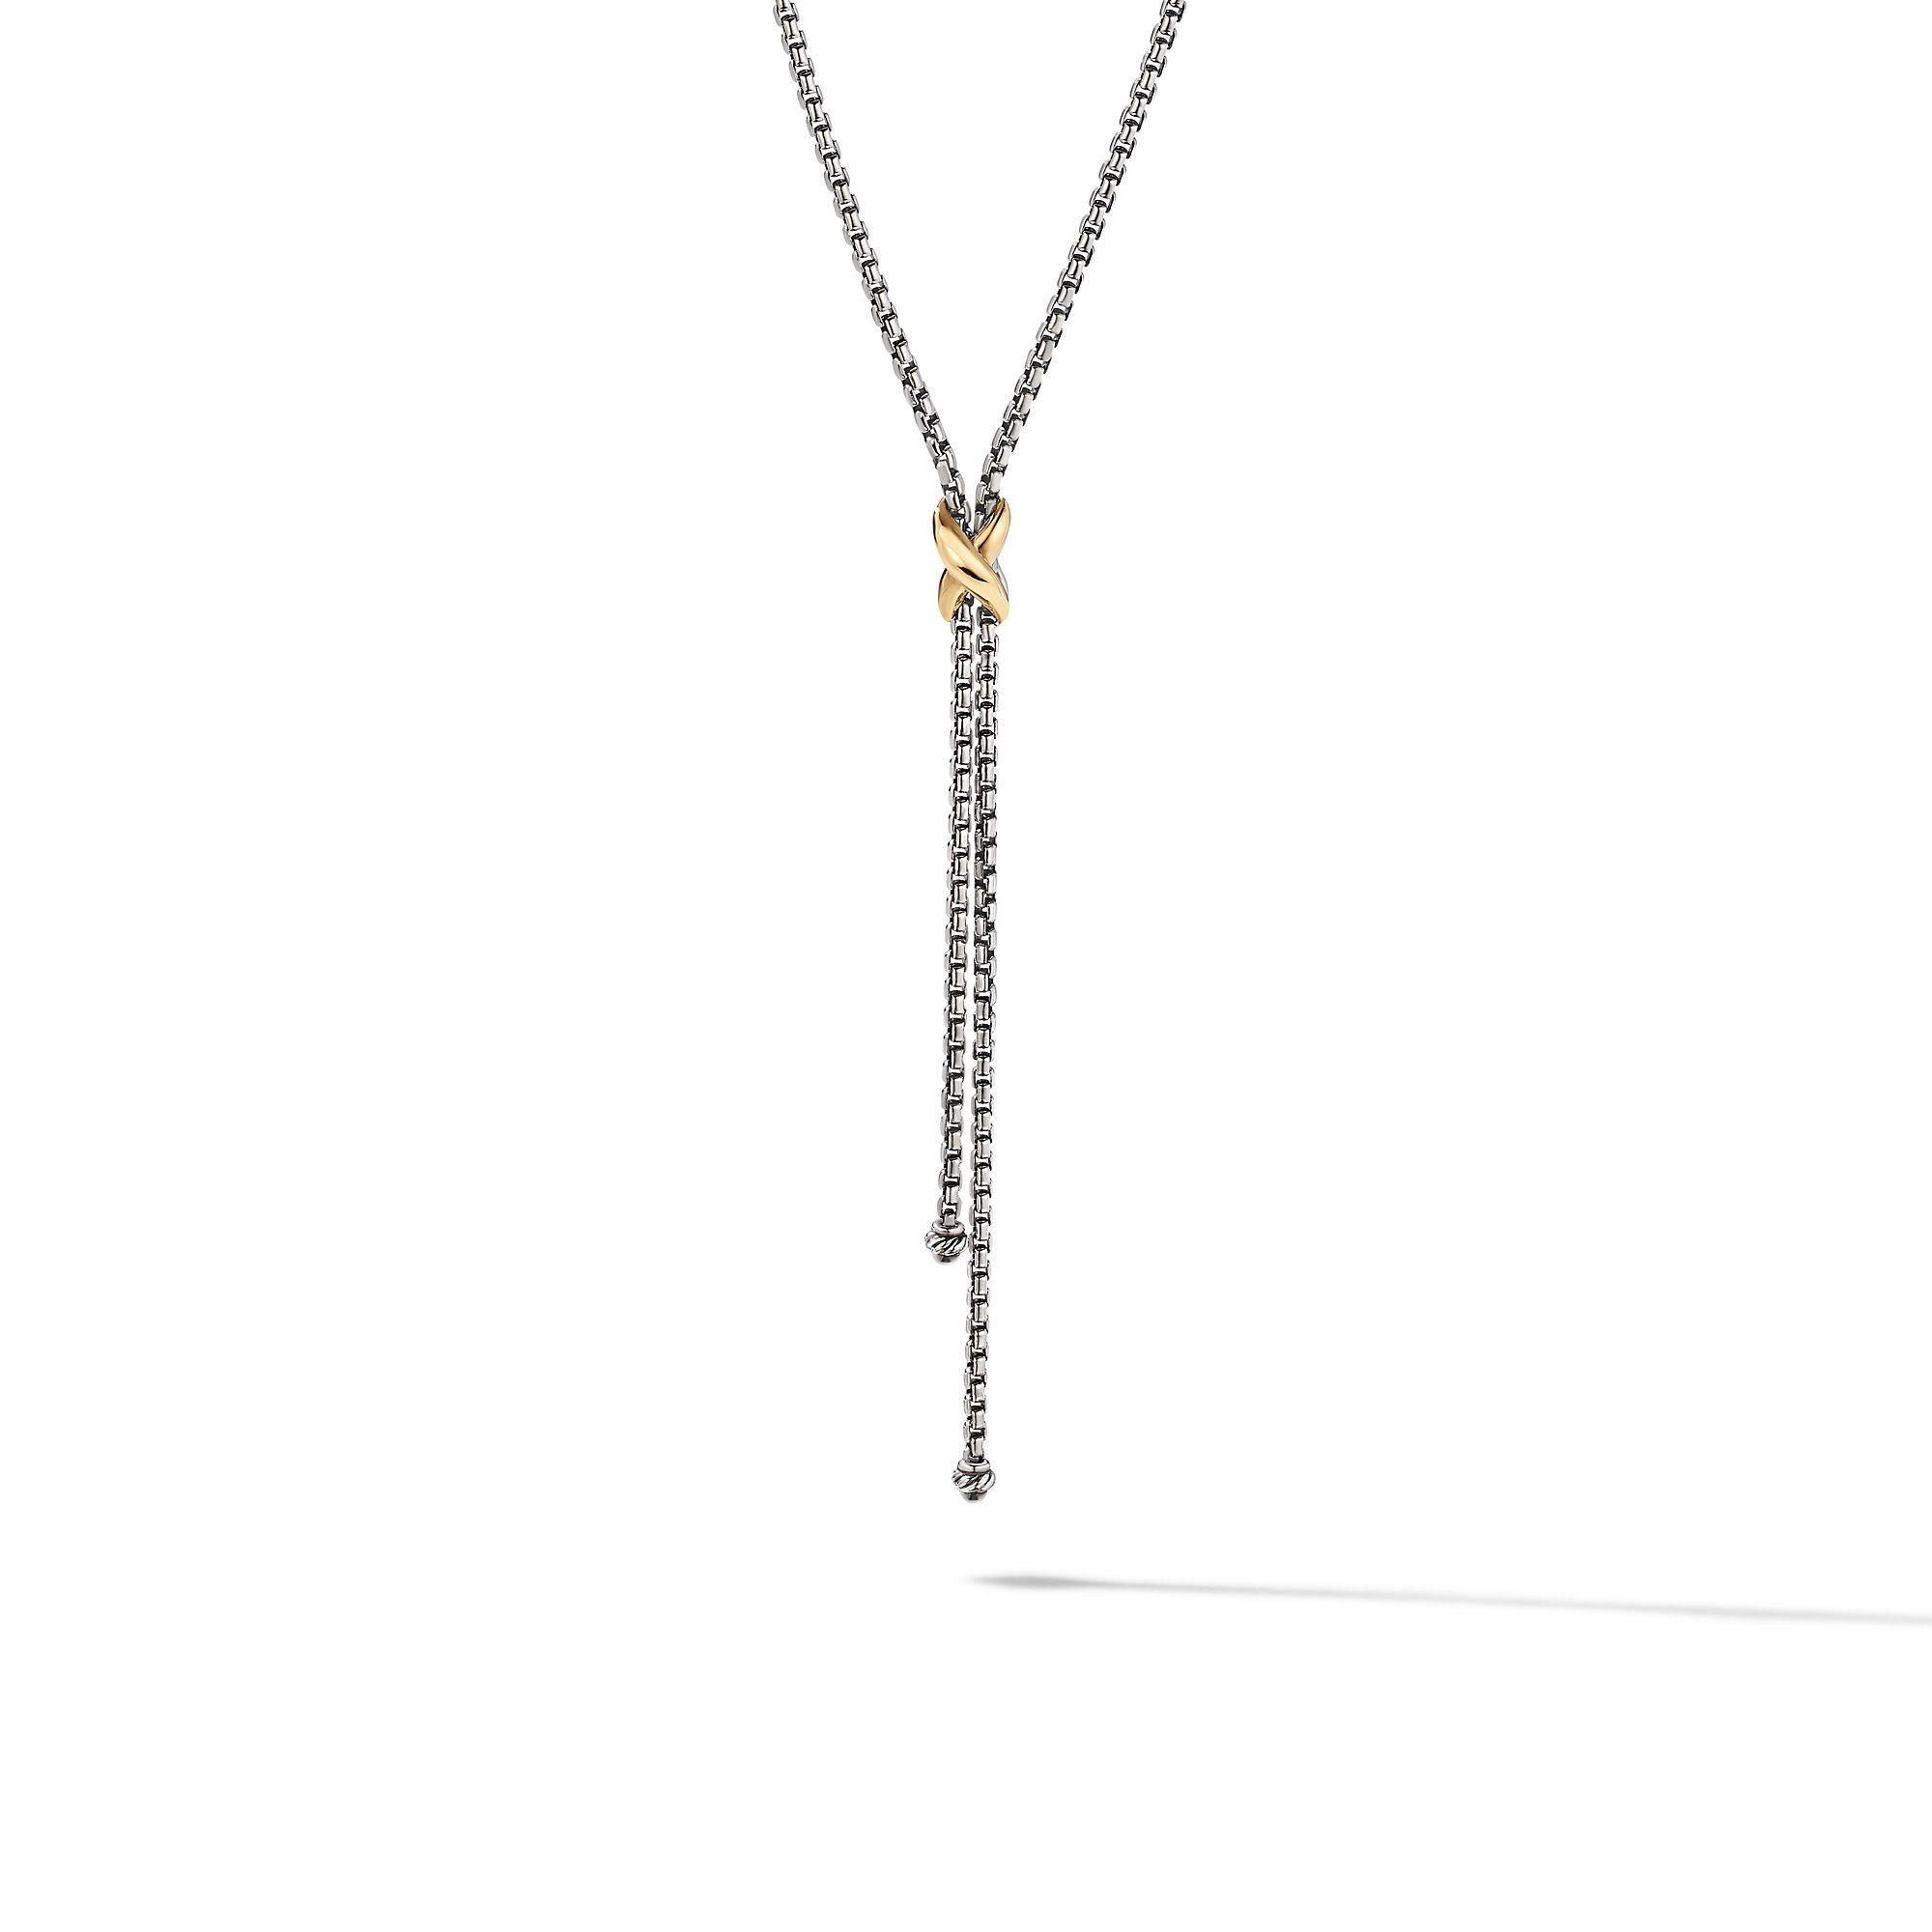 David Yurman Petite X Lariat Y Necklace with 18k Yellow Gold